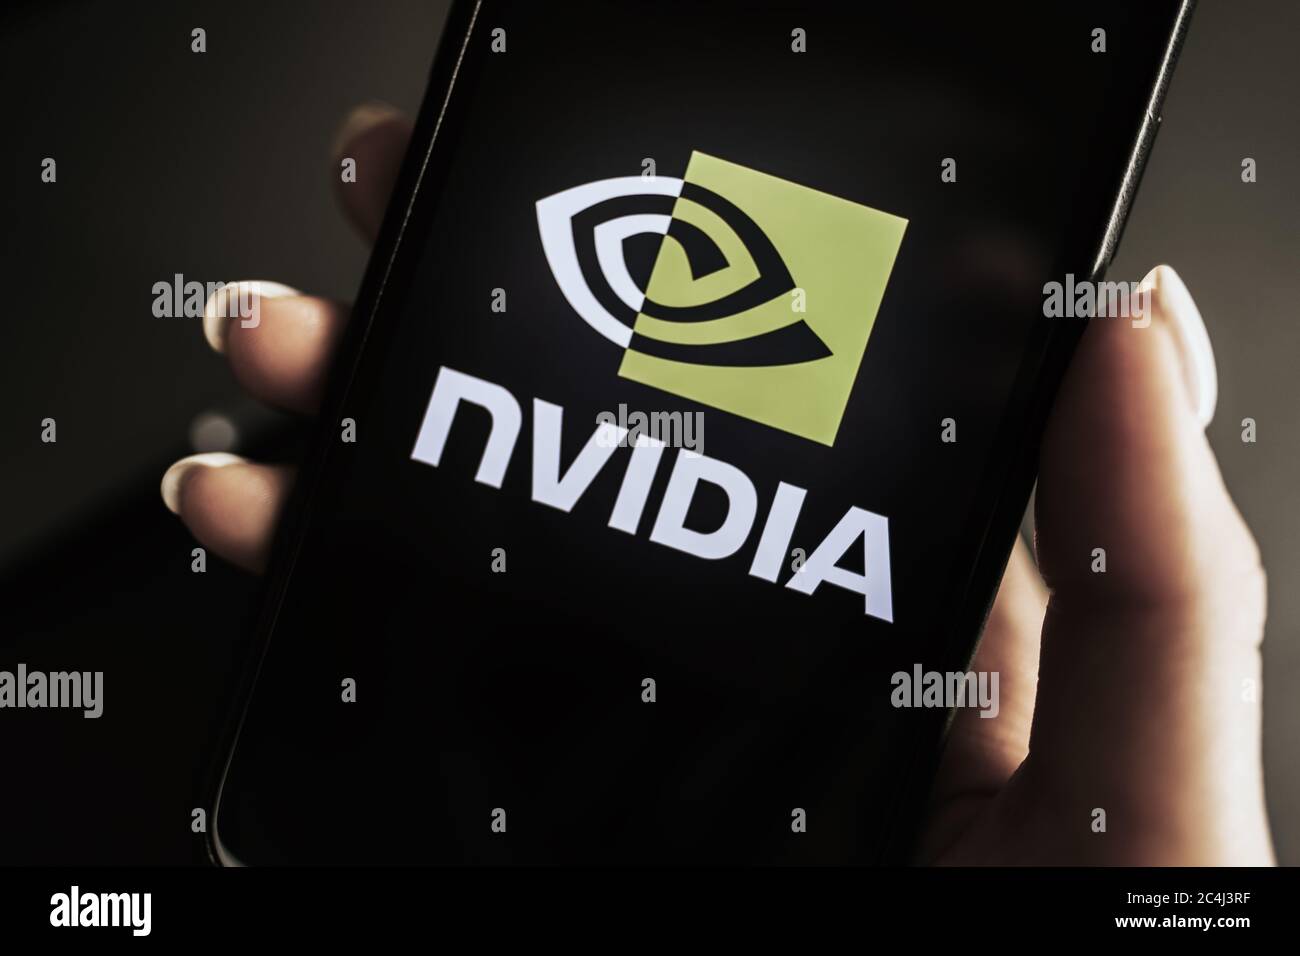 Nvidia Logo On The Smartphone Screen Stock Photo Alamy